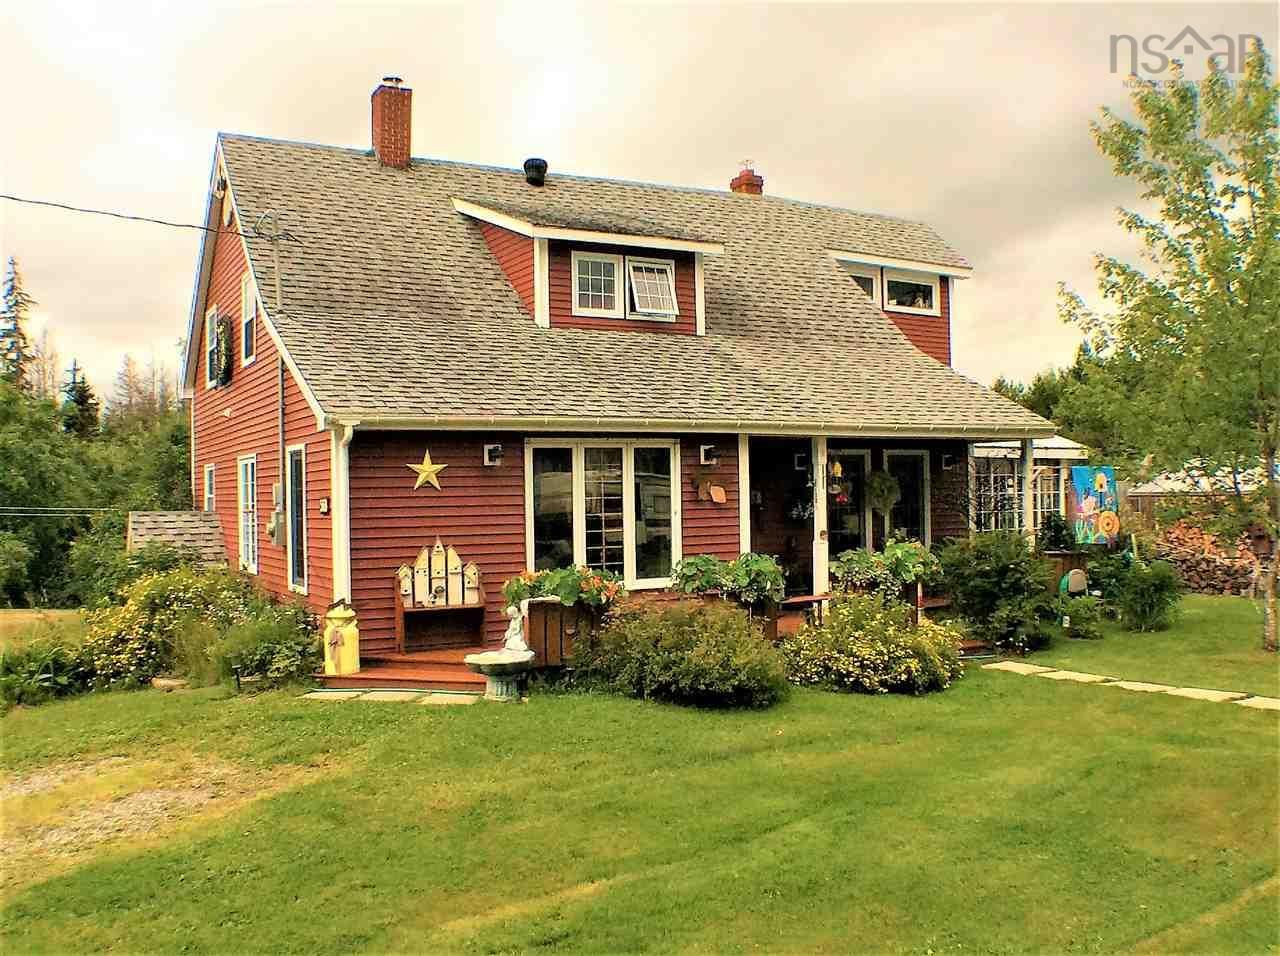 Main Photo: 568 Big Farm Road in Baddeck: 209-Victoria County / Baddeck Residential for sale (Cape Breton)  : MLS®# 202122894